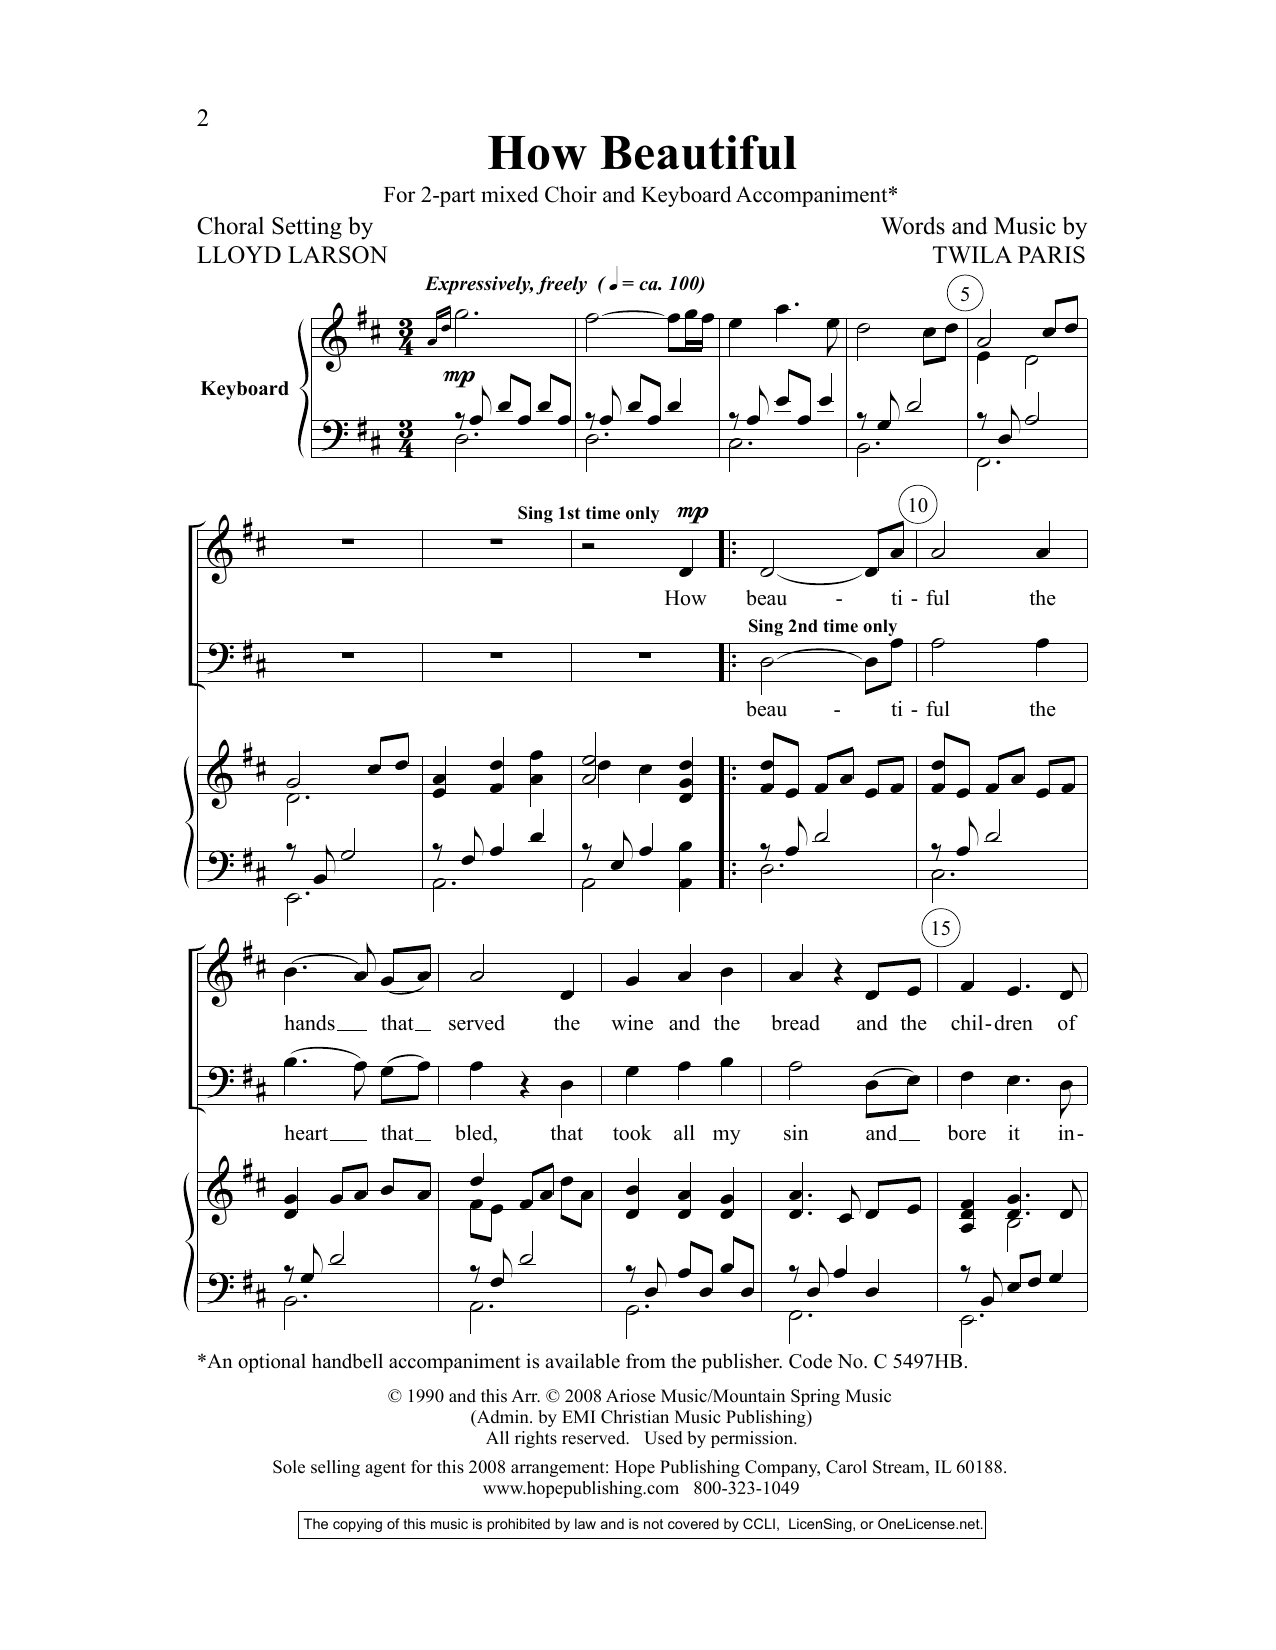 Lloyd Larson How Beautiful sheet music notes and chords arranged for SAB Choir